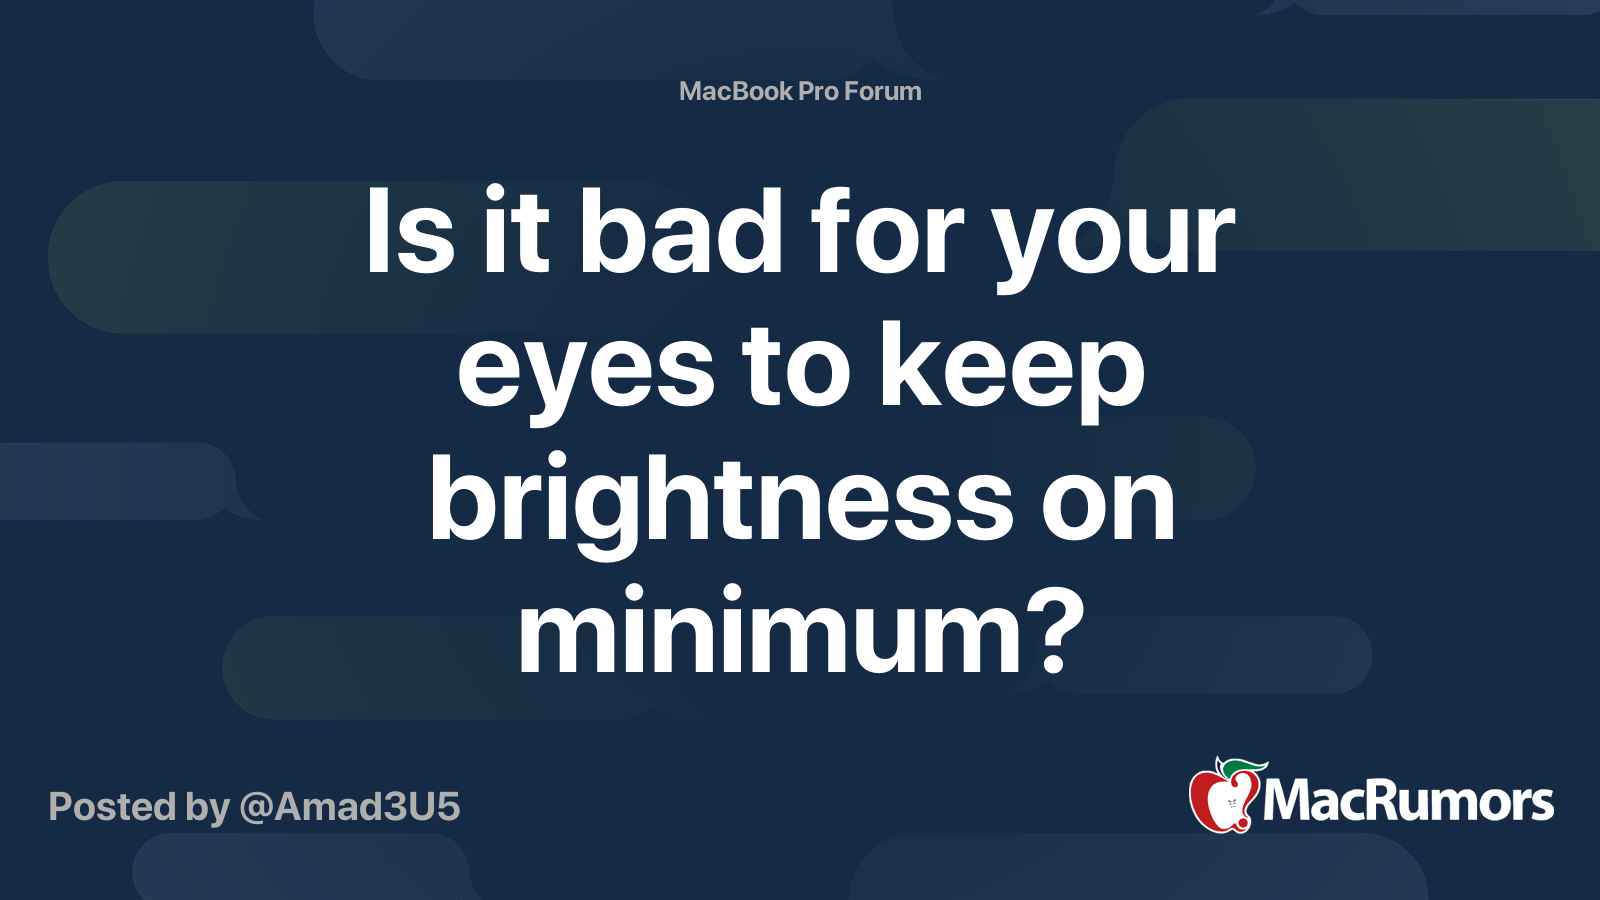 Is higher brightness good for eyes?